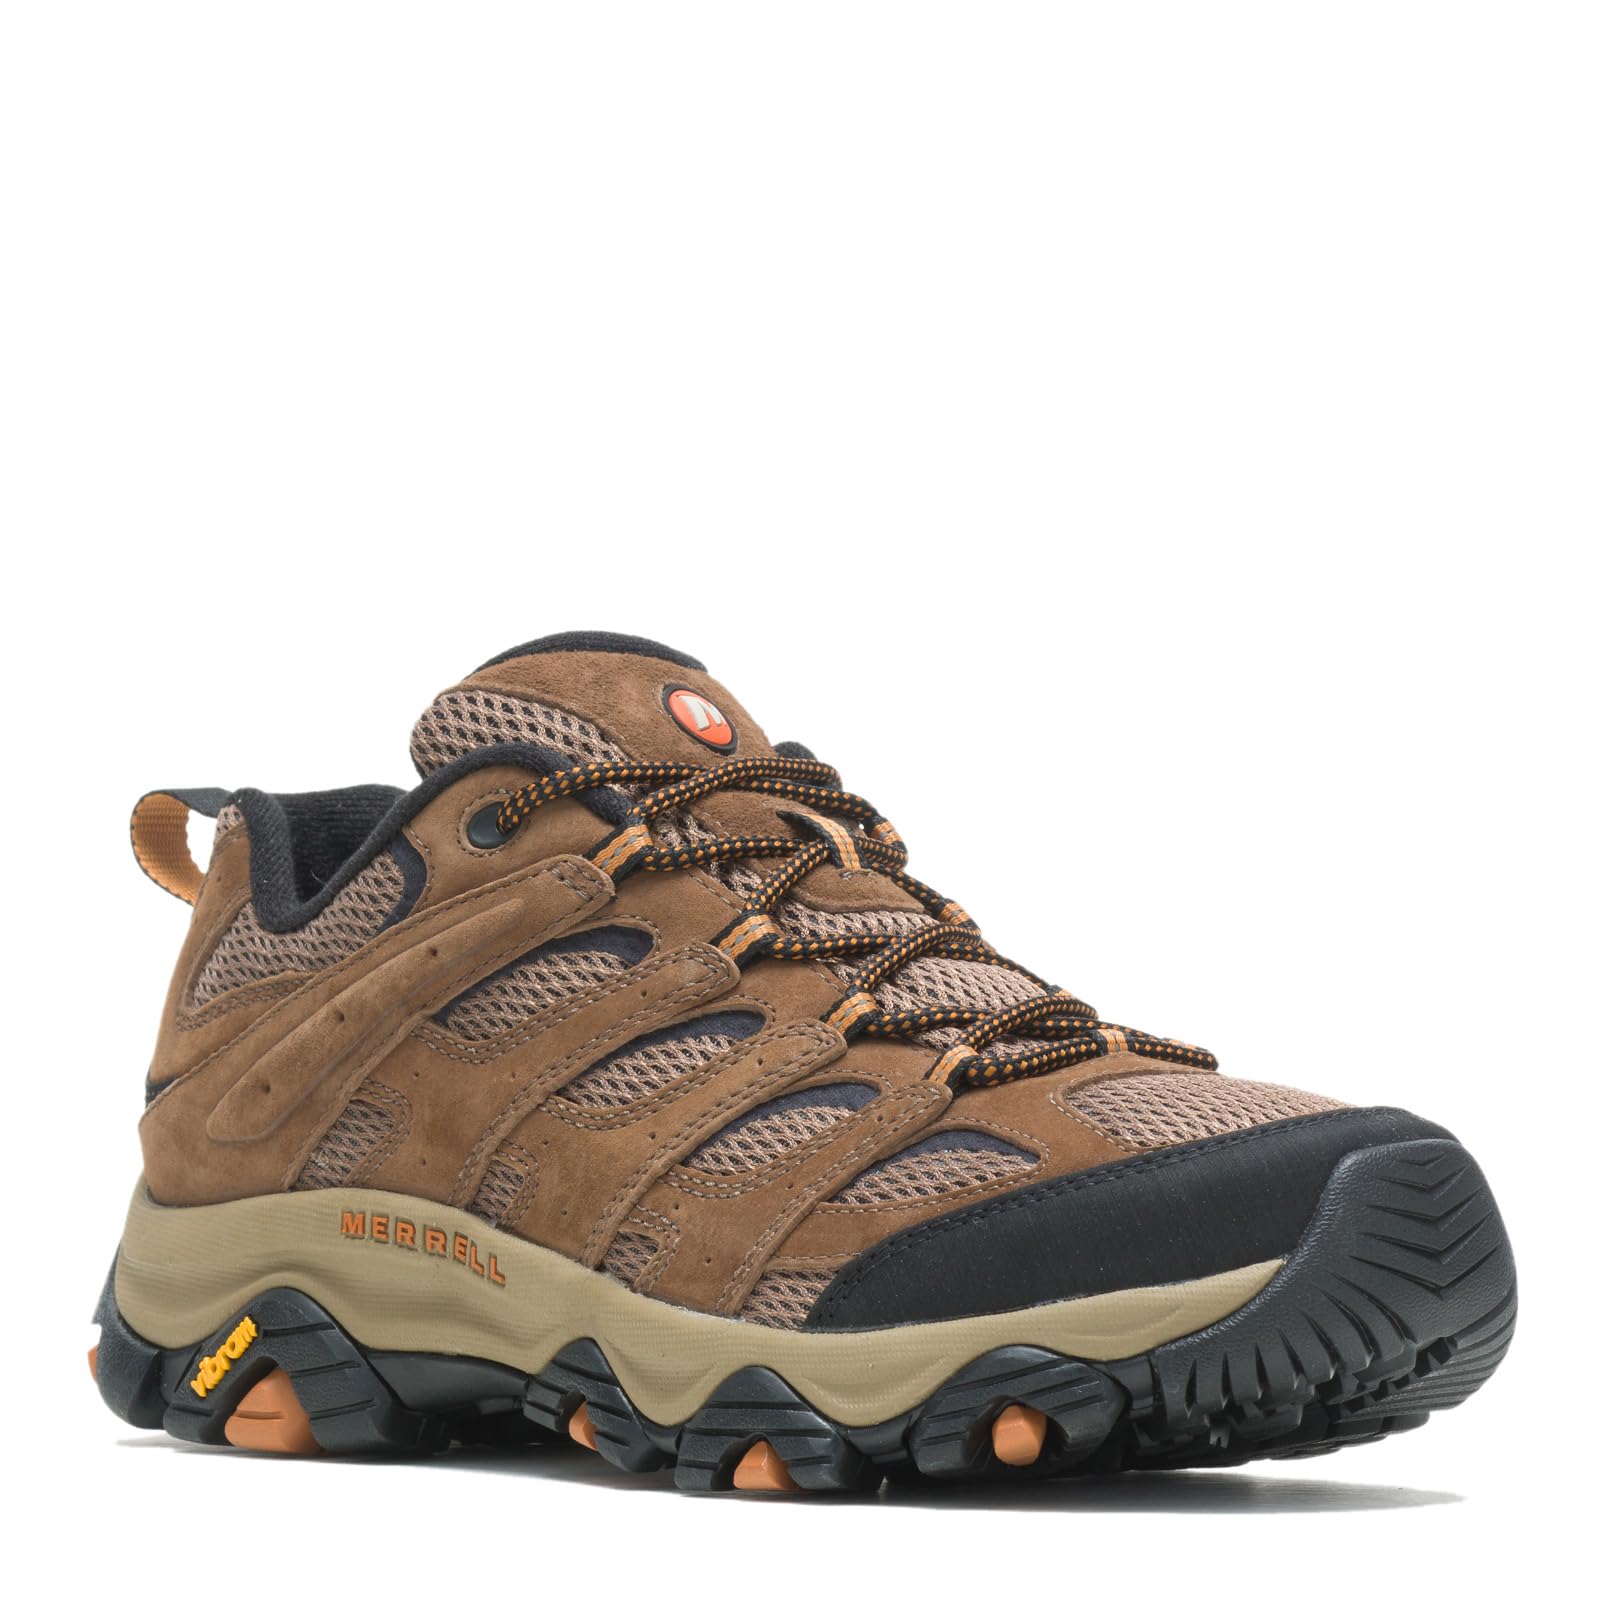 Merrell Men's Moab 3 Hiking Shoe, Earth, 11